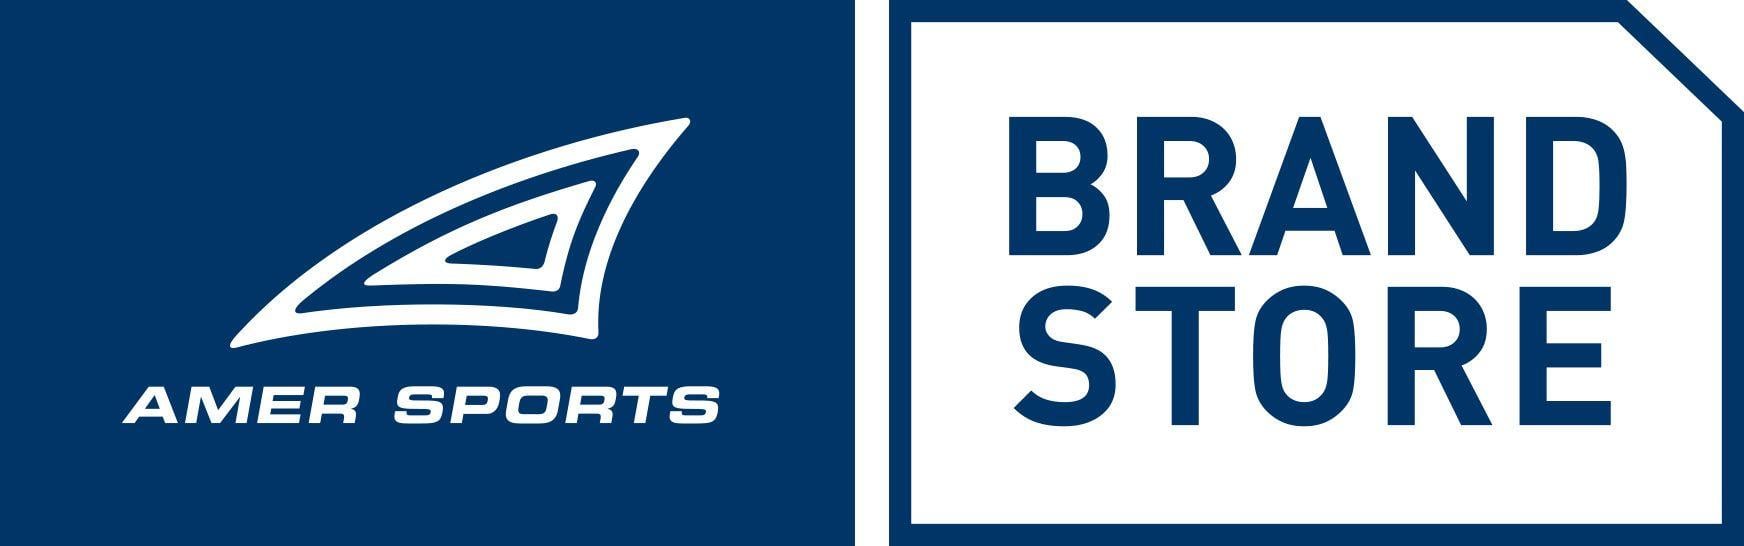 Store Brand Logo - Amer Sports Brand Store